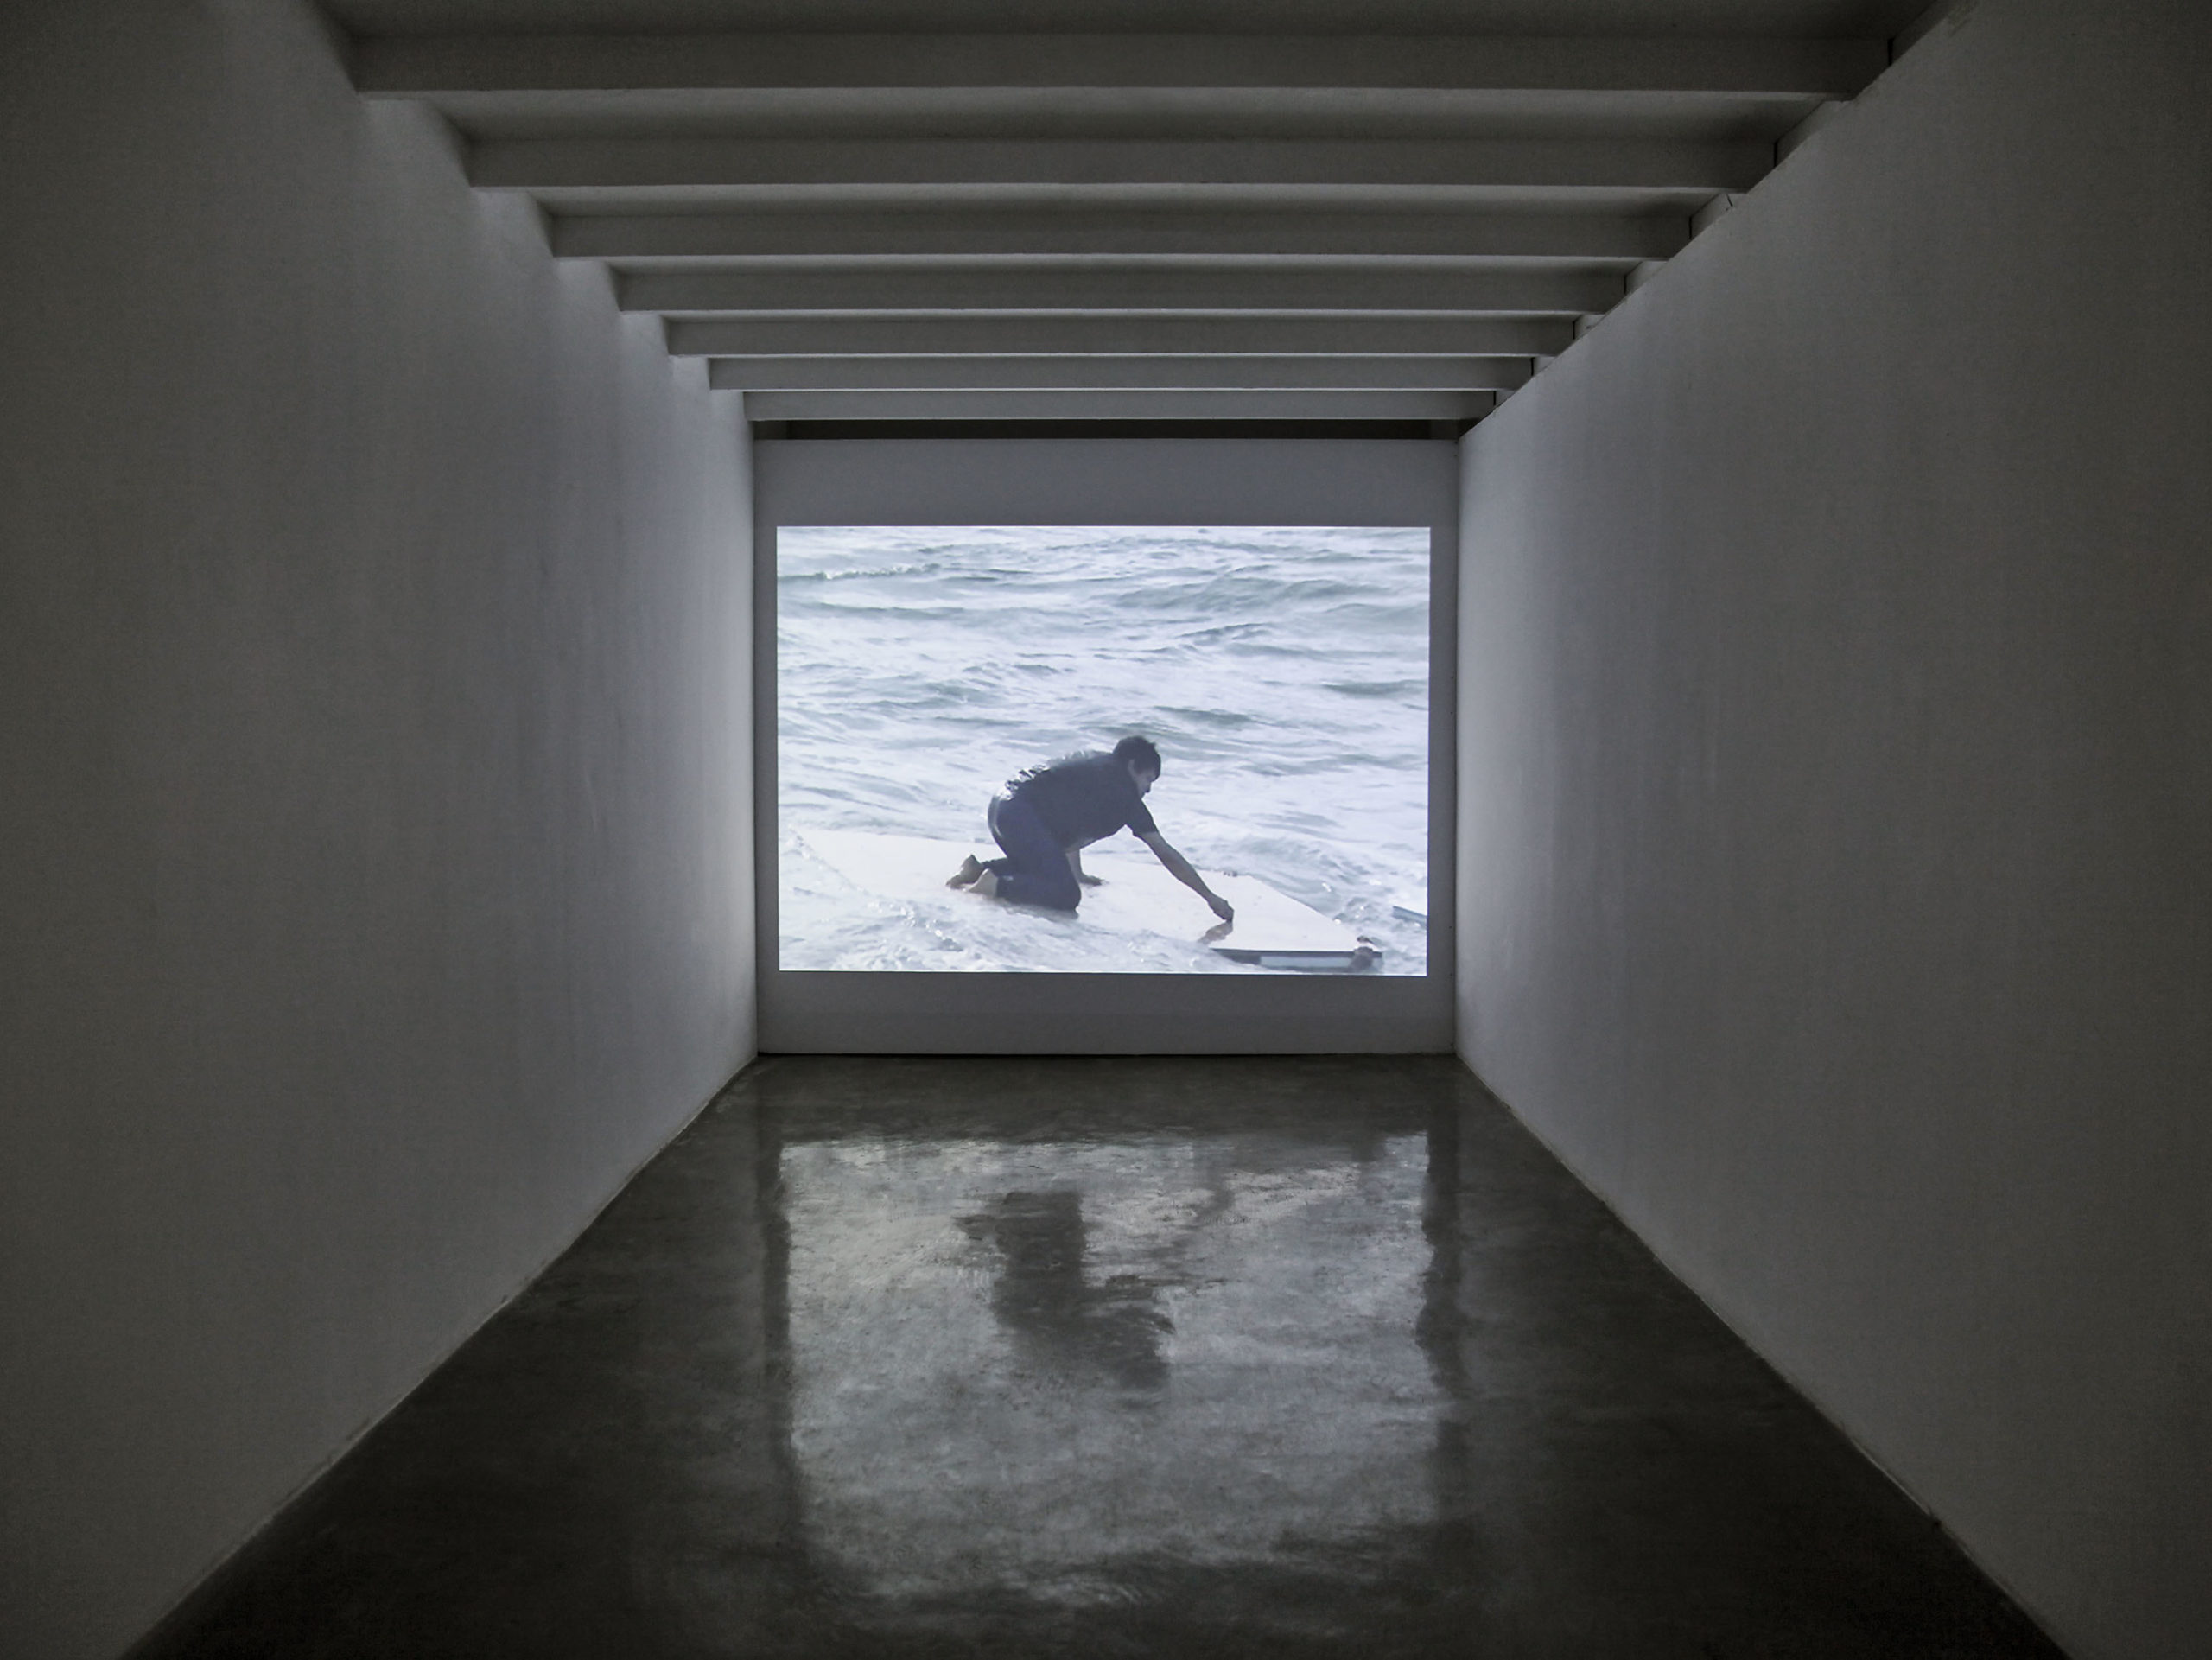 Adel Abdessemed - Total Museum of Contemporary Art, Seoul, South Korea